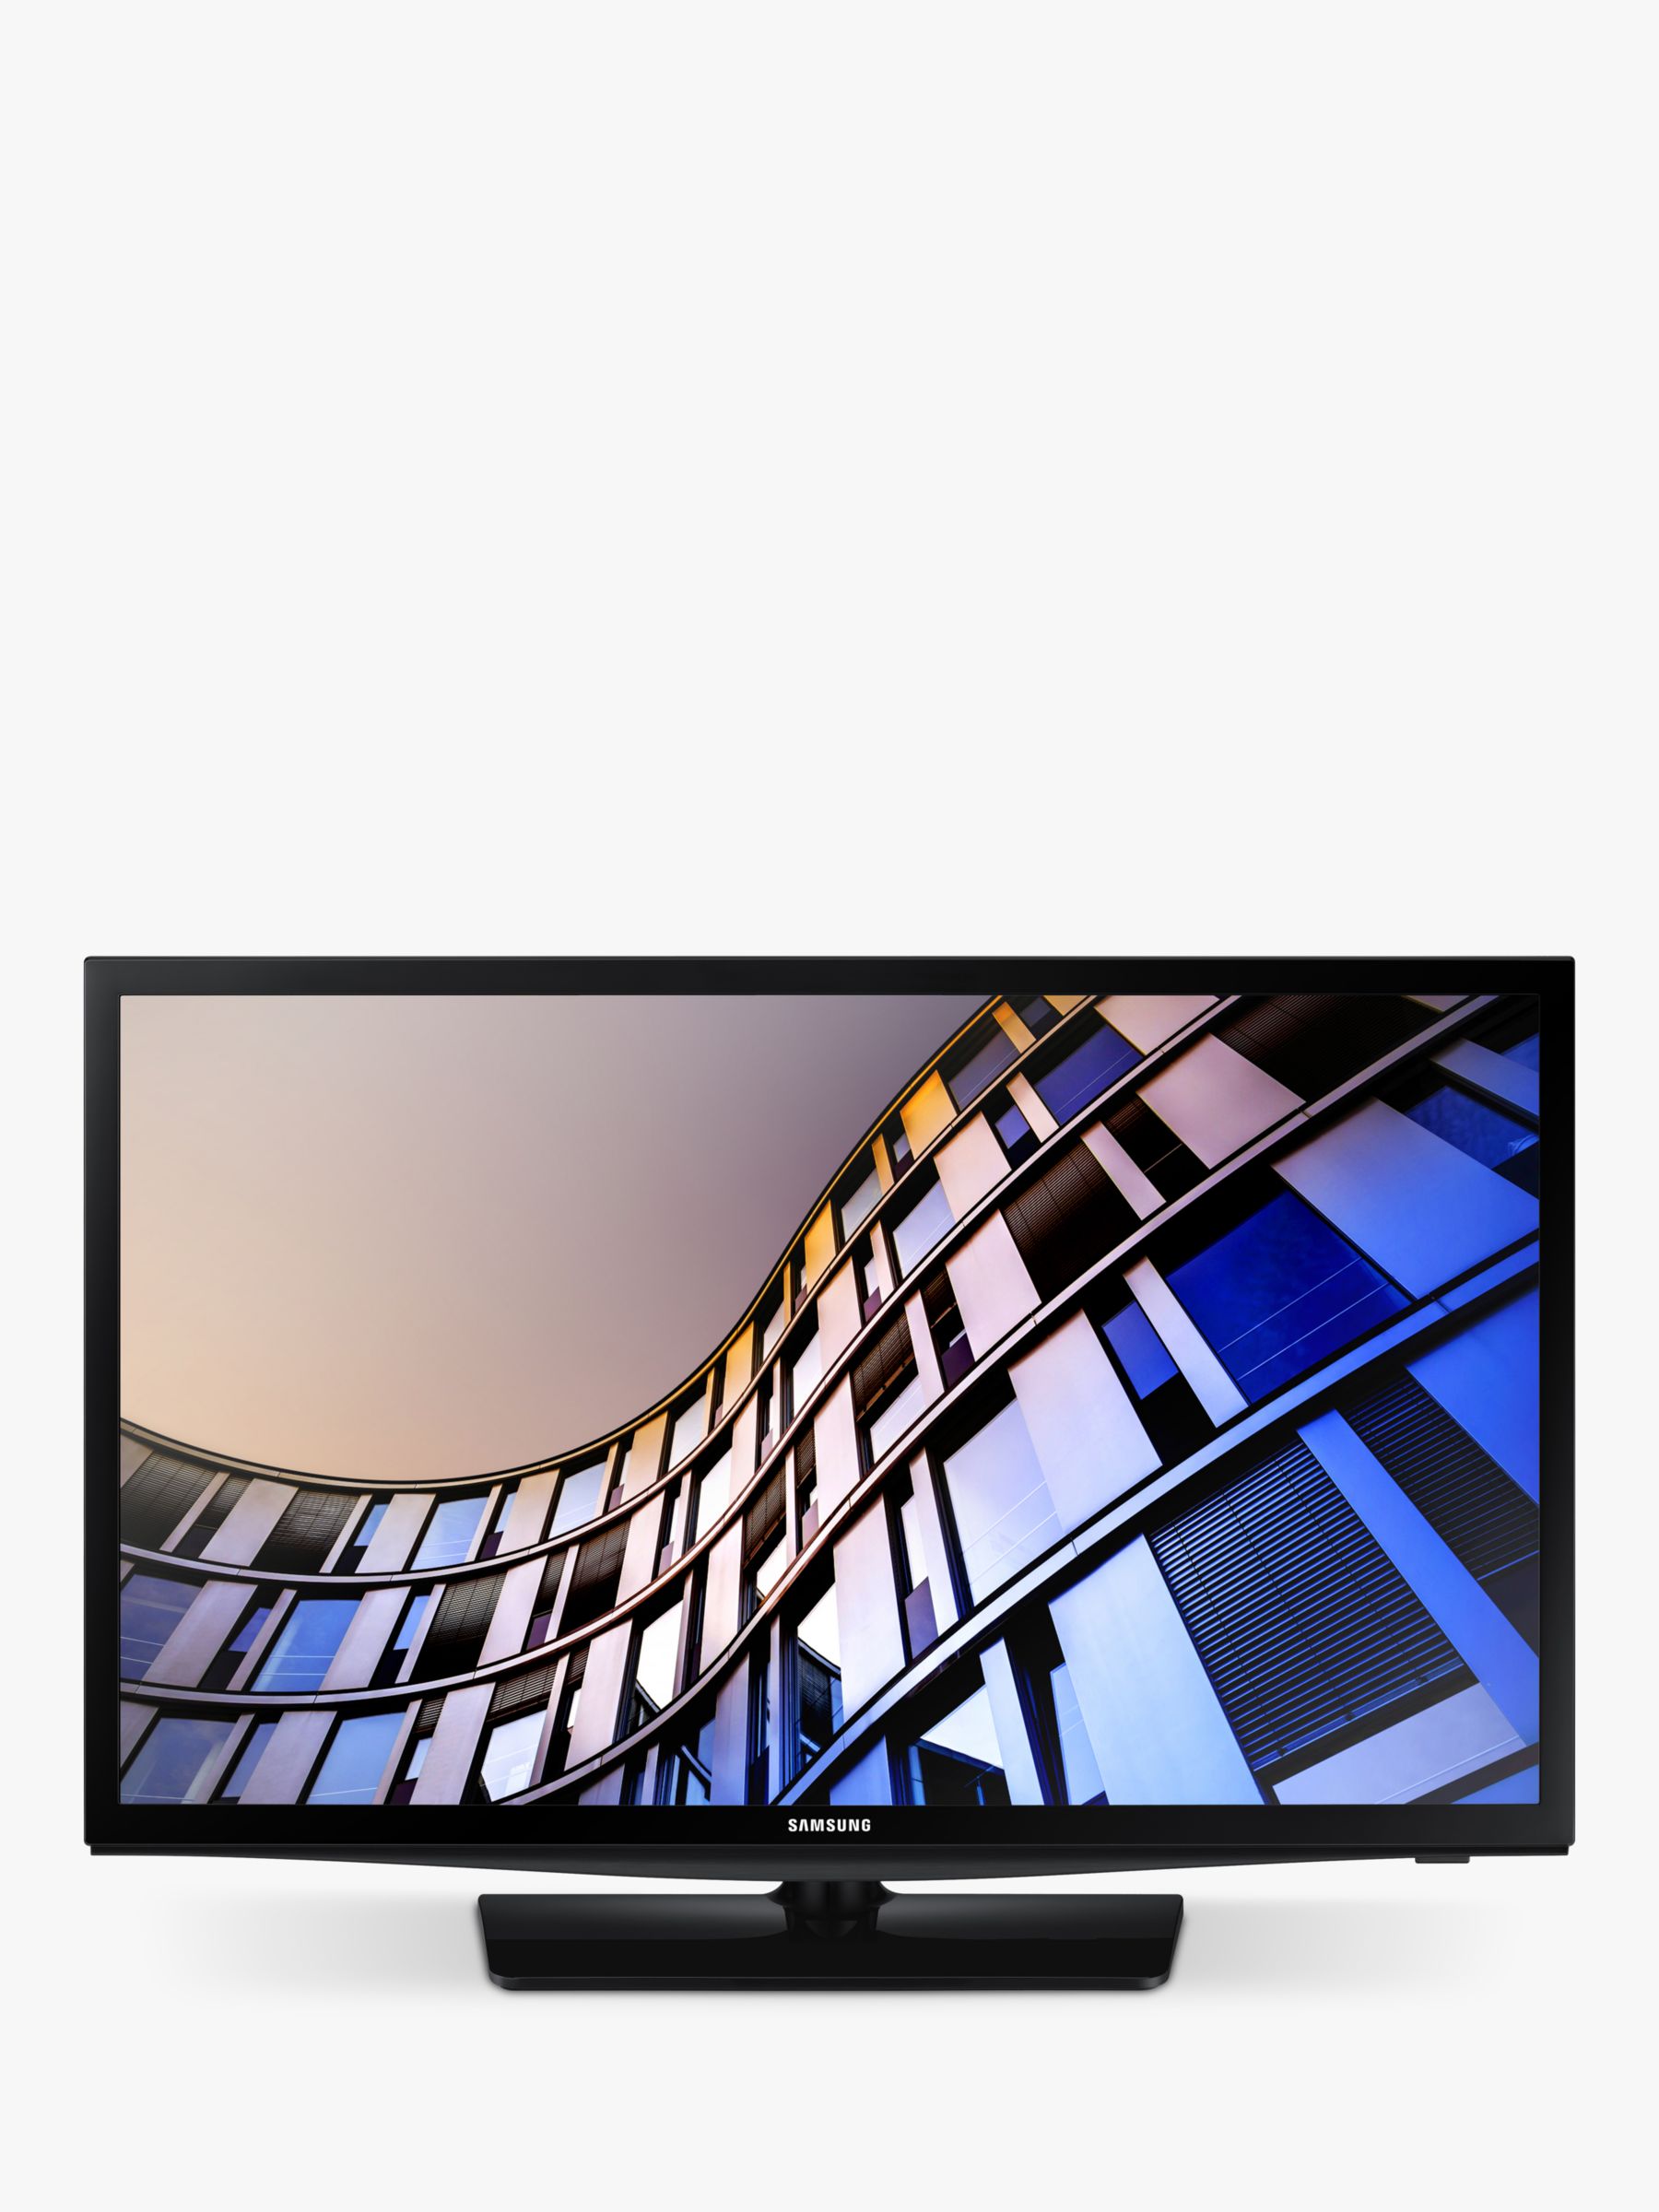 Samsung UE24N4300 HDR HD Ready Smart 24 inch with TVPlus, Black